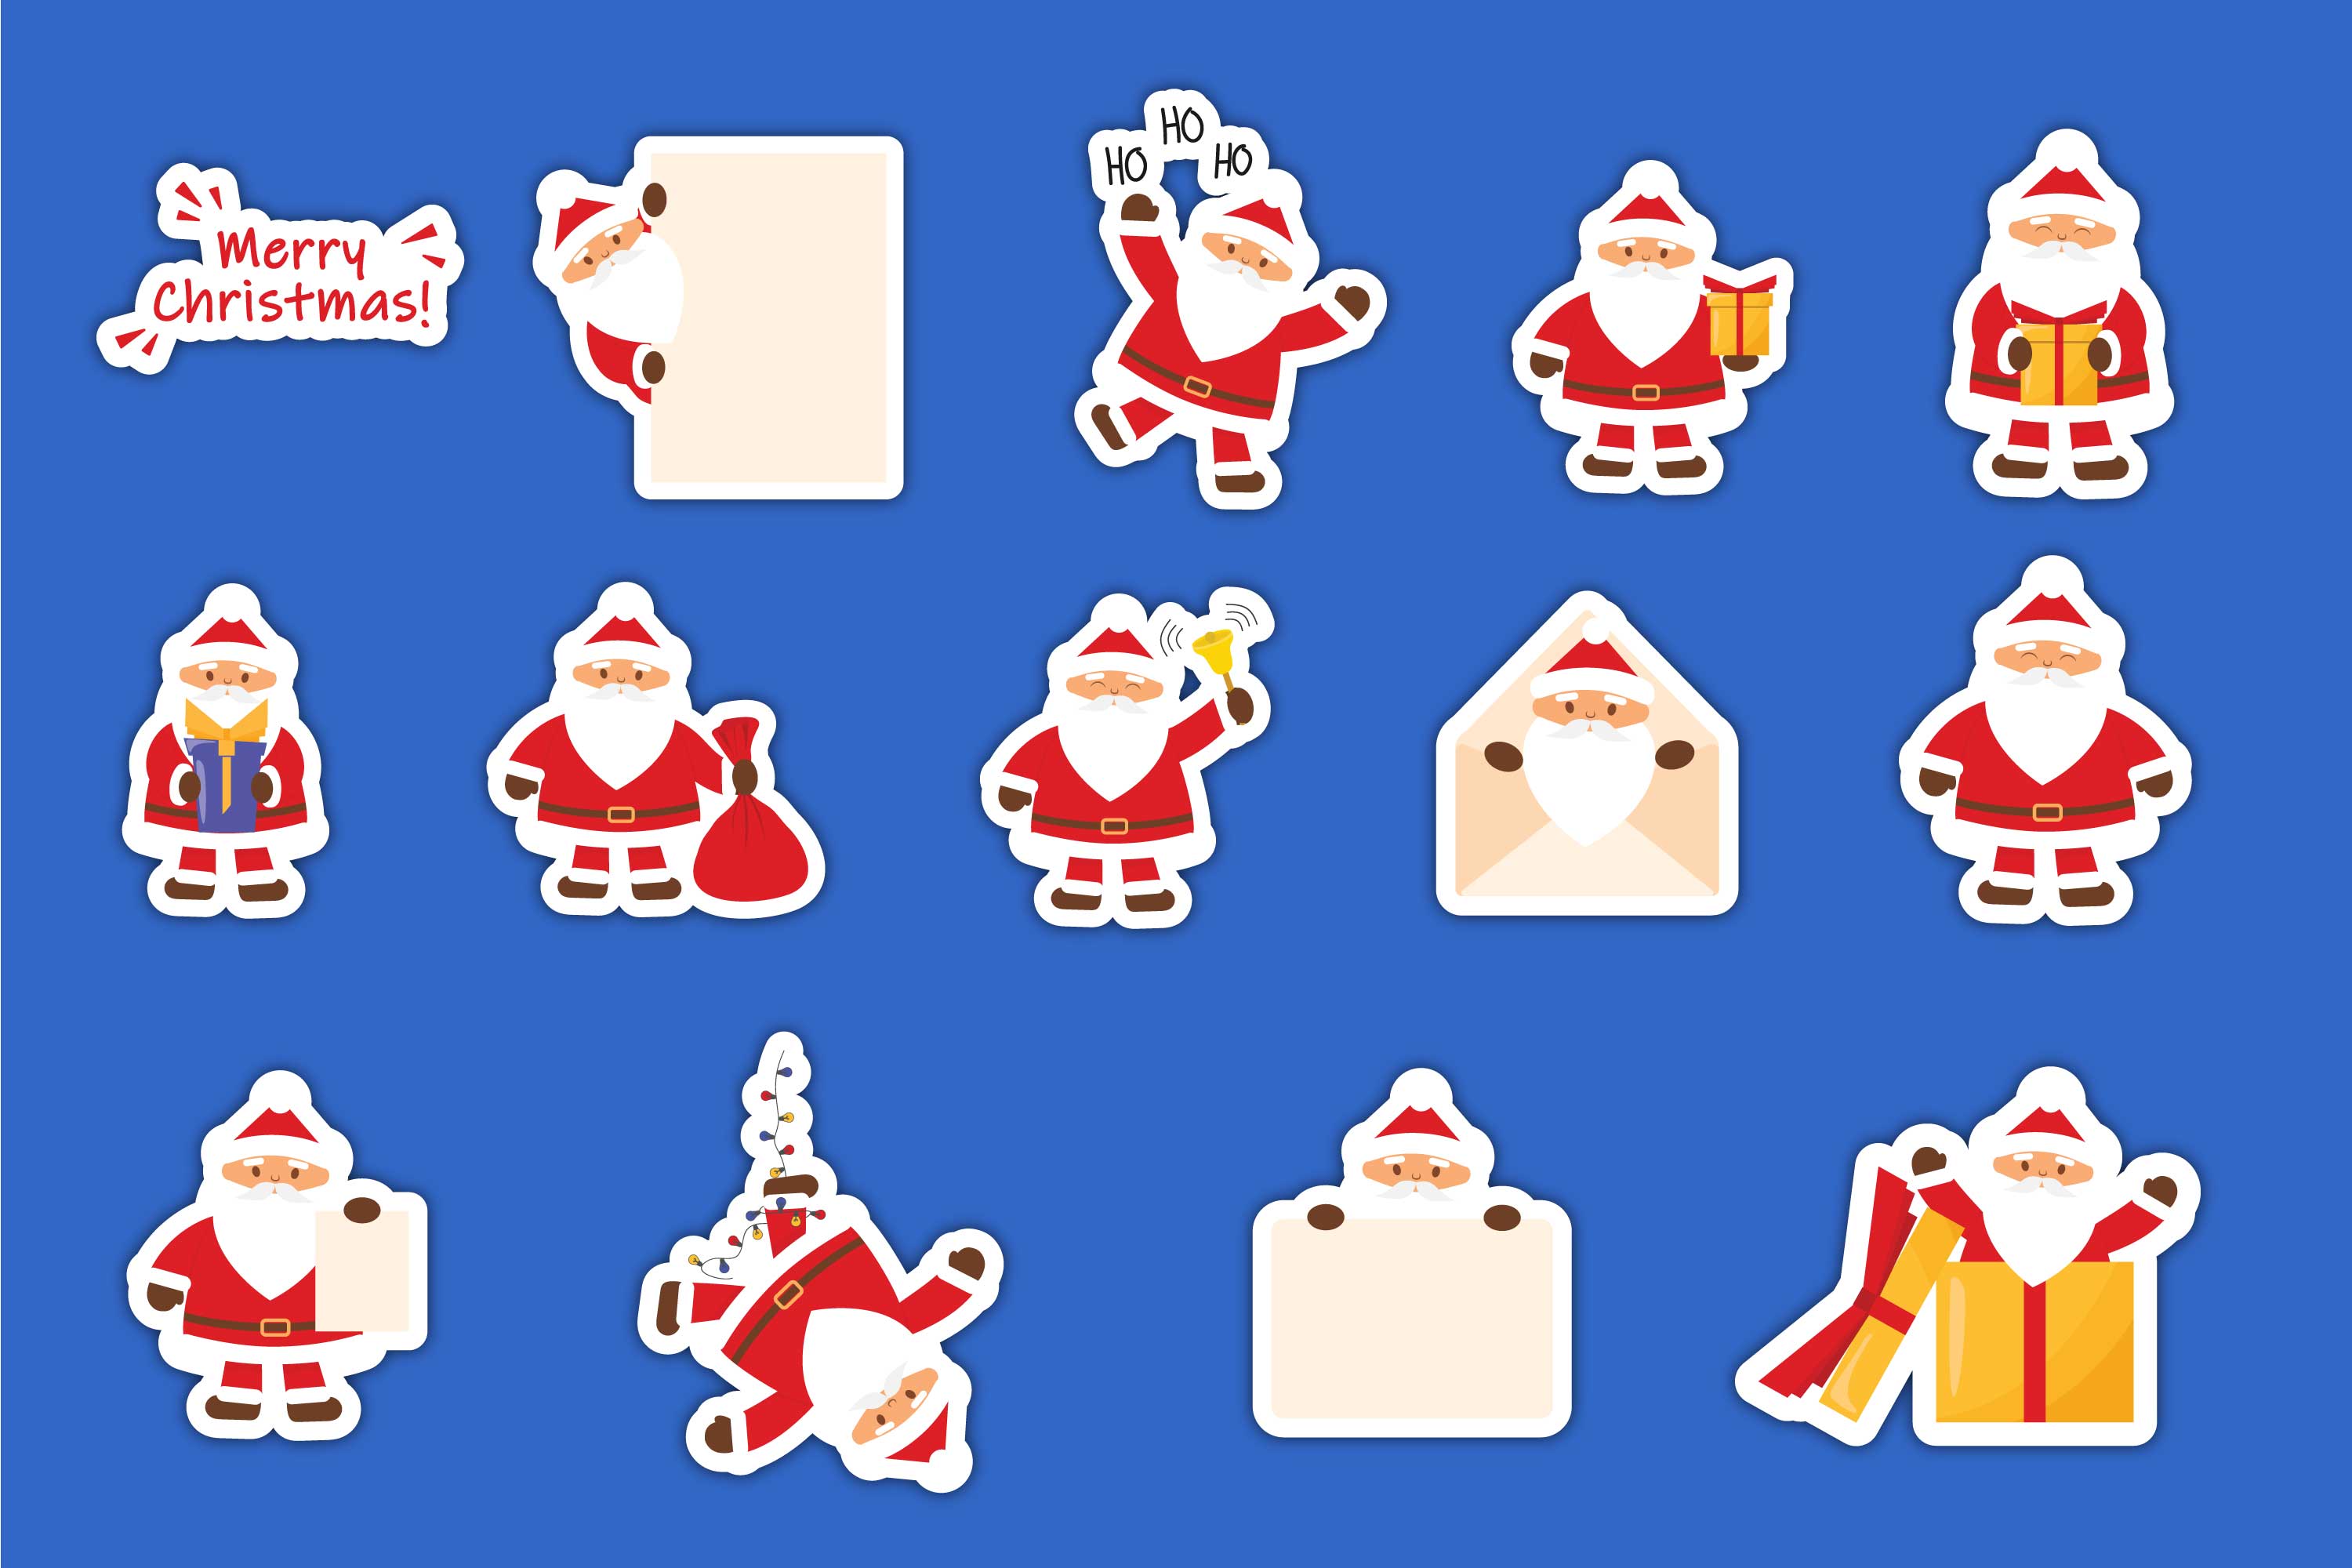 Pack of wonderful images of cute Santa stickers